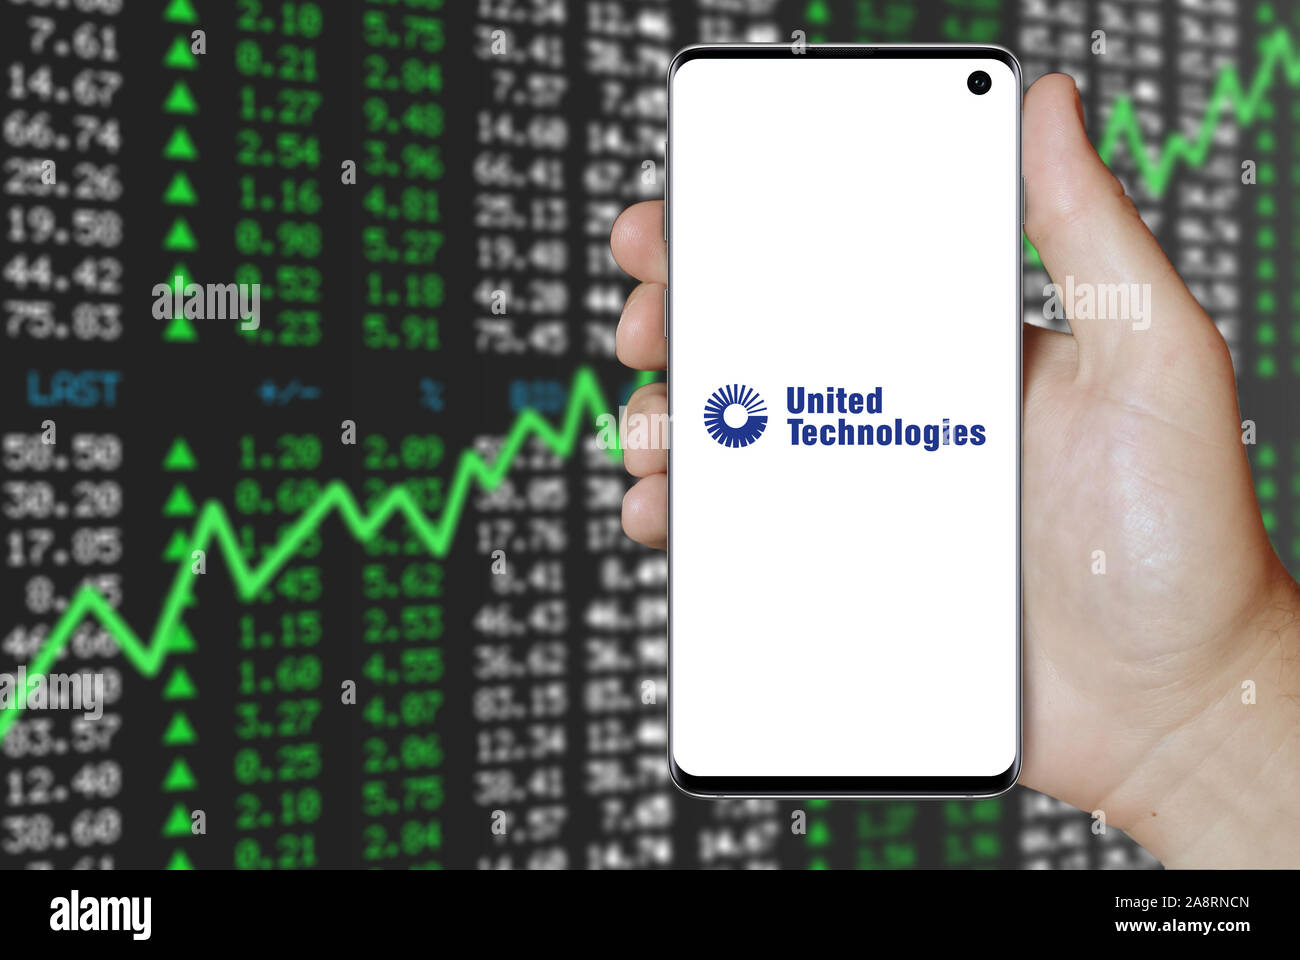 Logo of public company United Technologies displayed on a smartphone. Positive stock market background. Credit: PIXDUCE Stock Photo